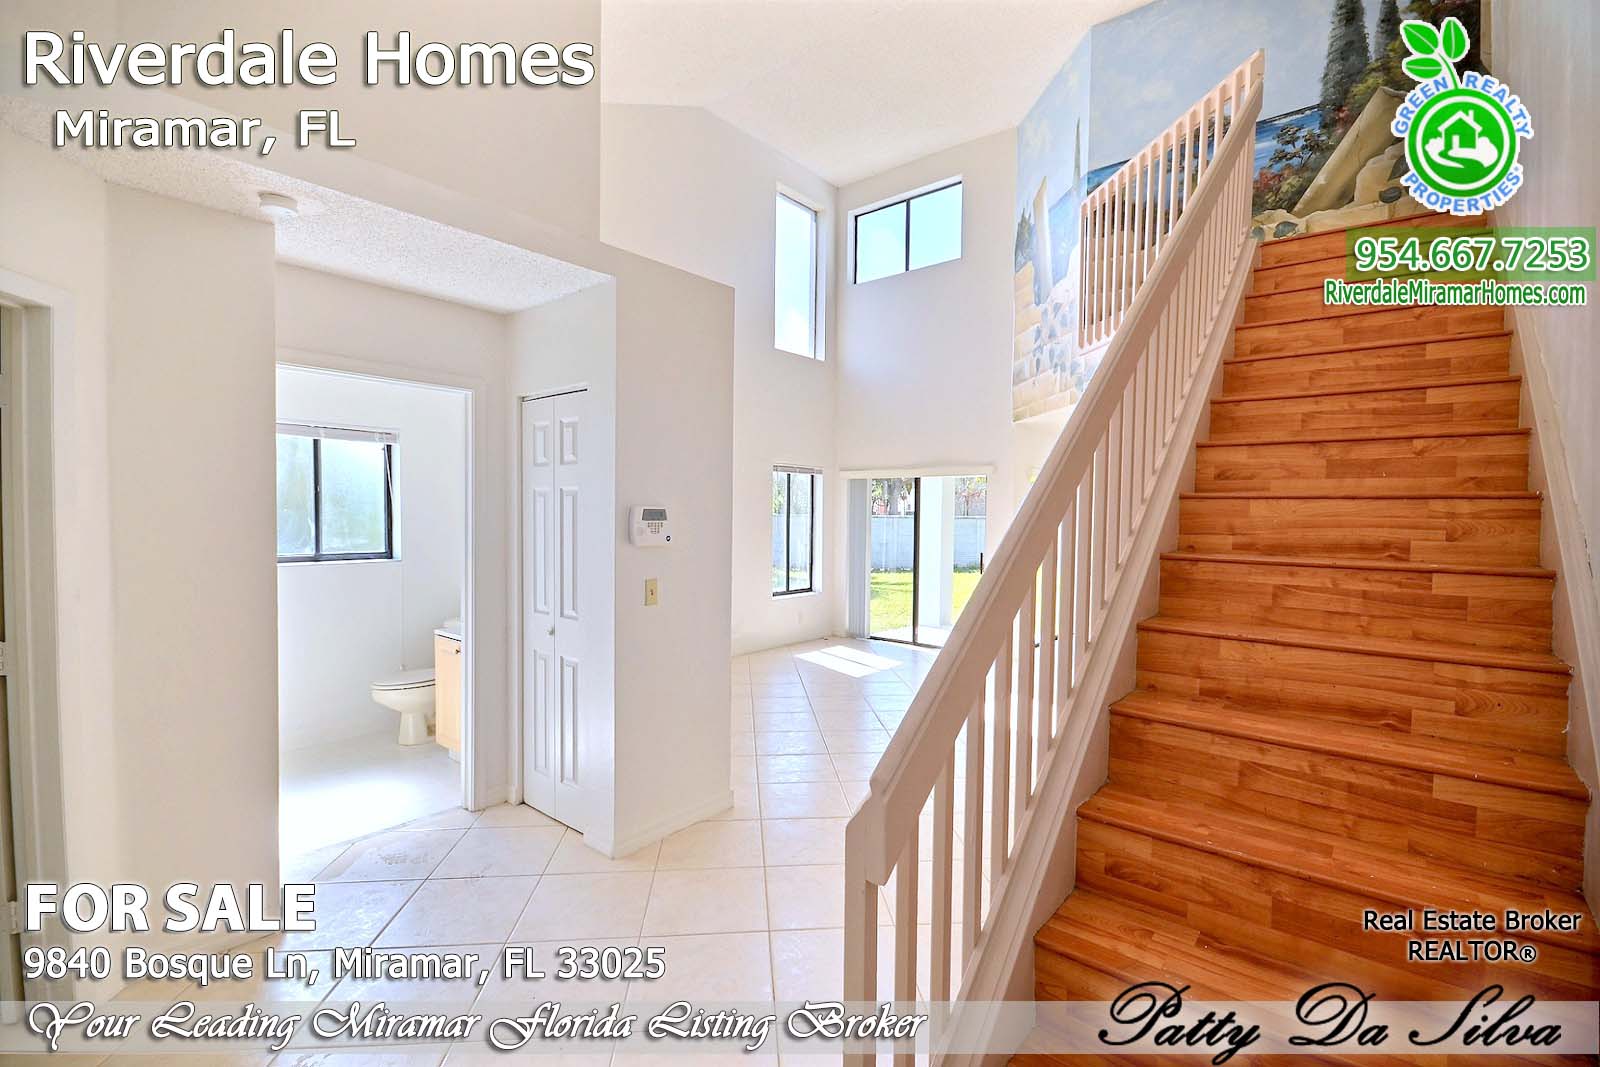 Riverdale Homes For Sale in Miramar Florida - 9840 Bosque Lane (9)